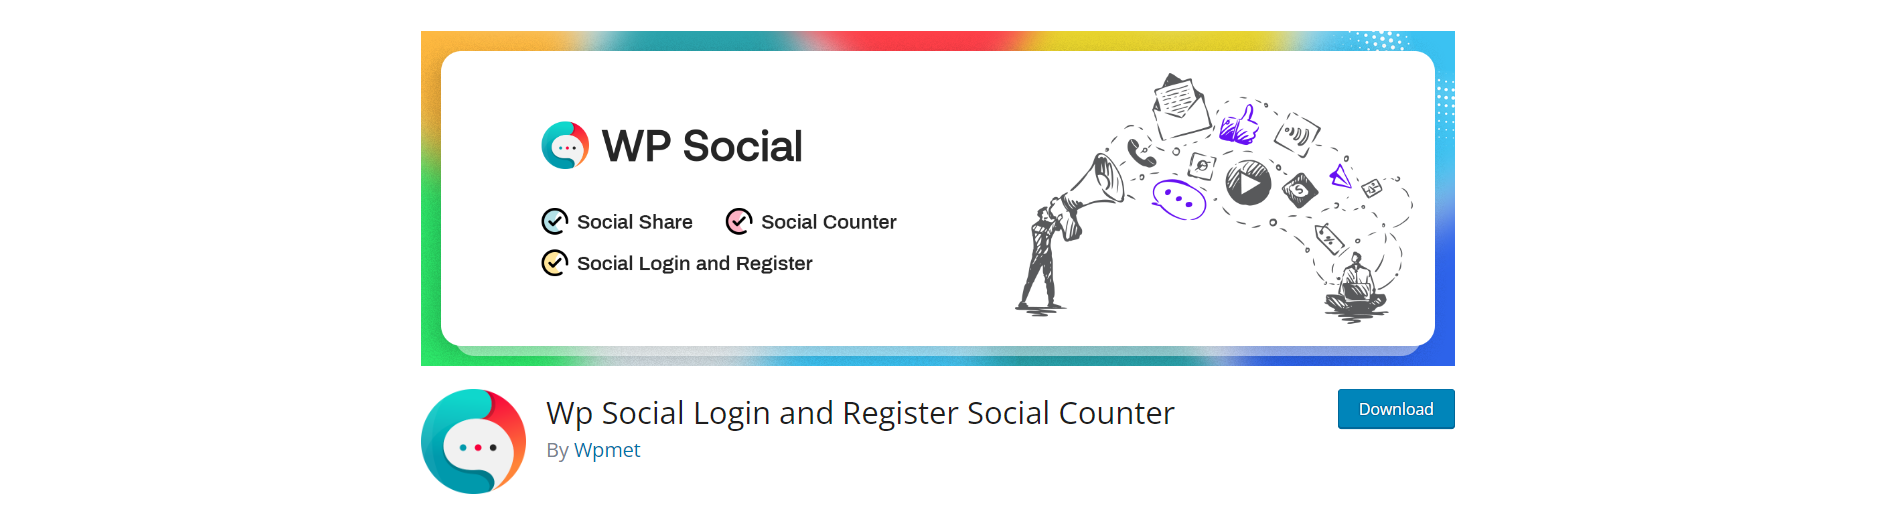 Wp Social Login and Register Social Counter